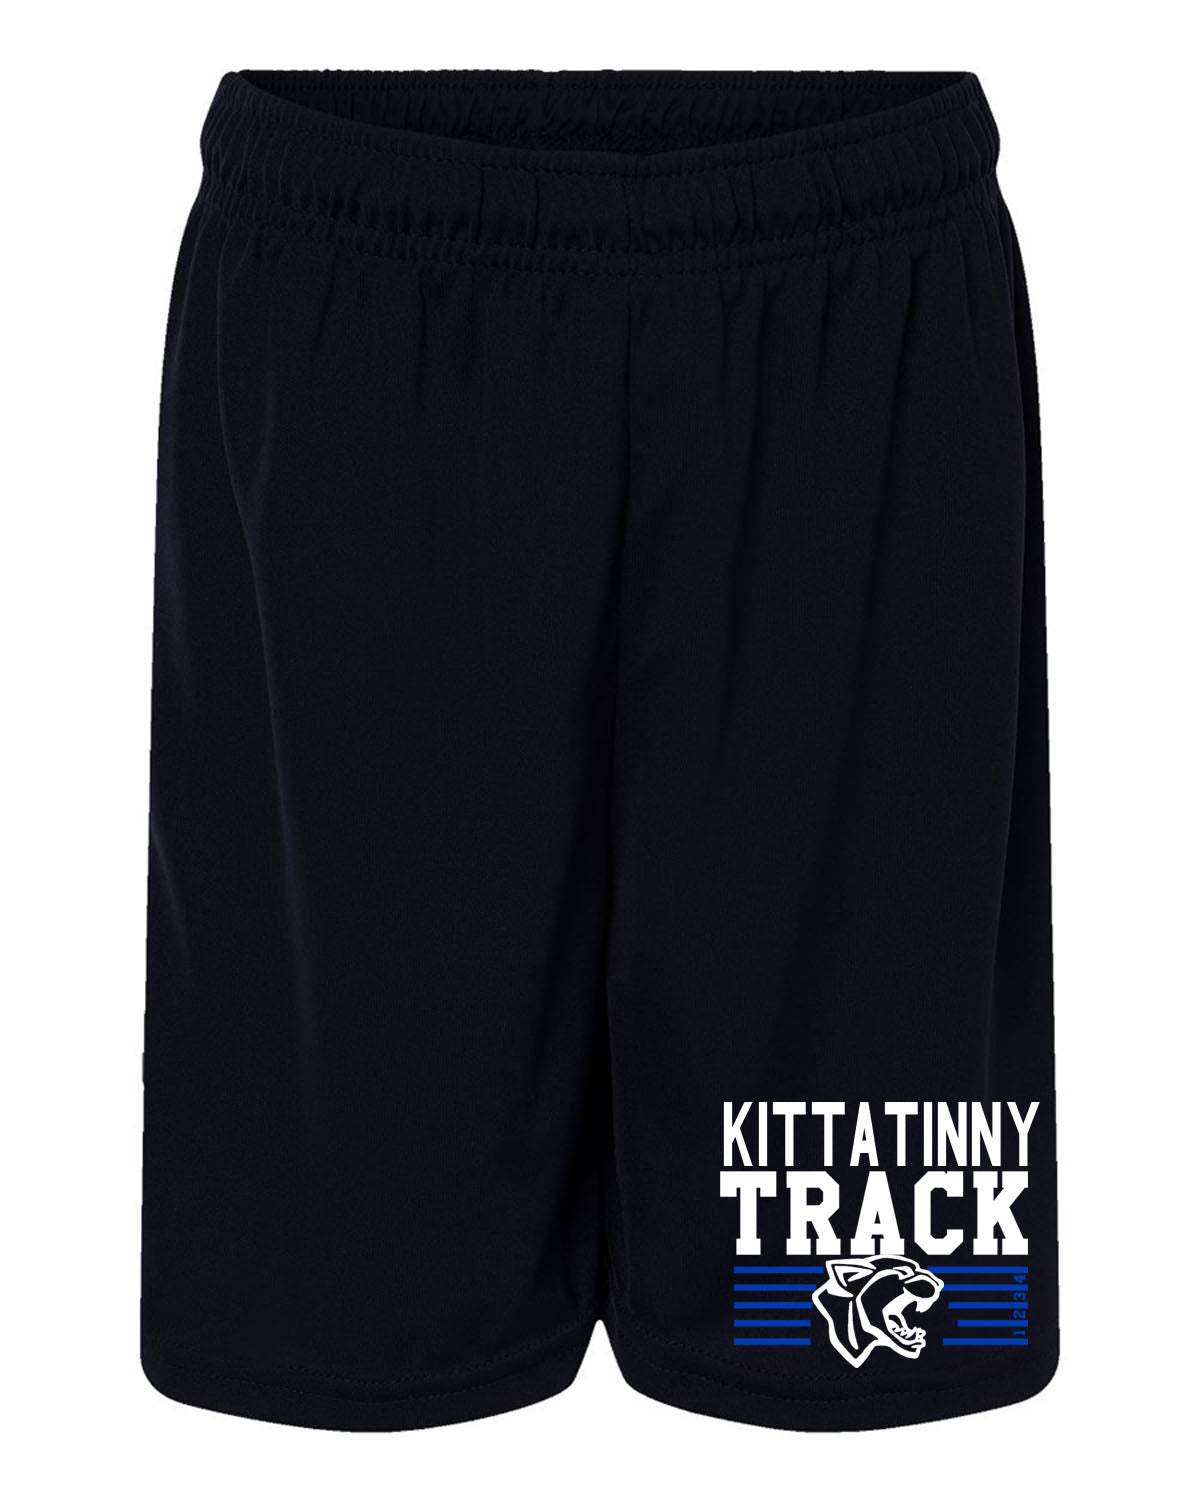 Kittatinny Track Performance Shorts Design 5